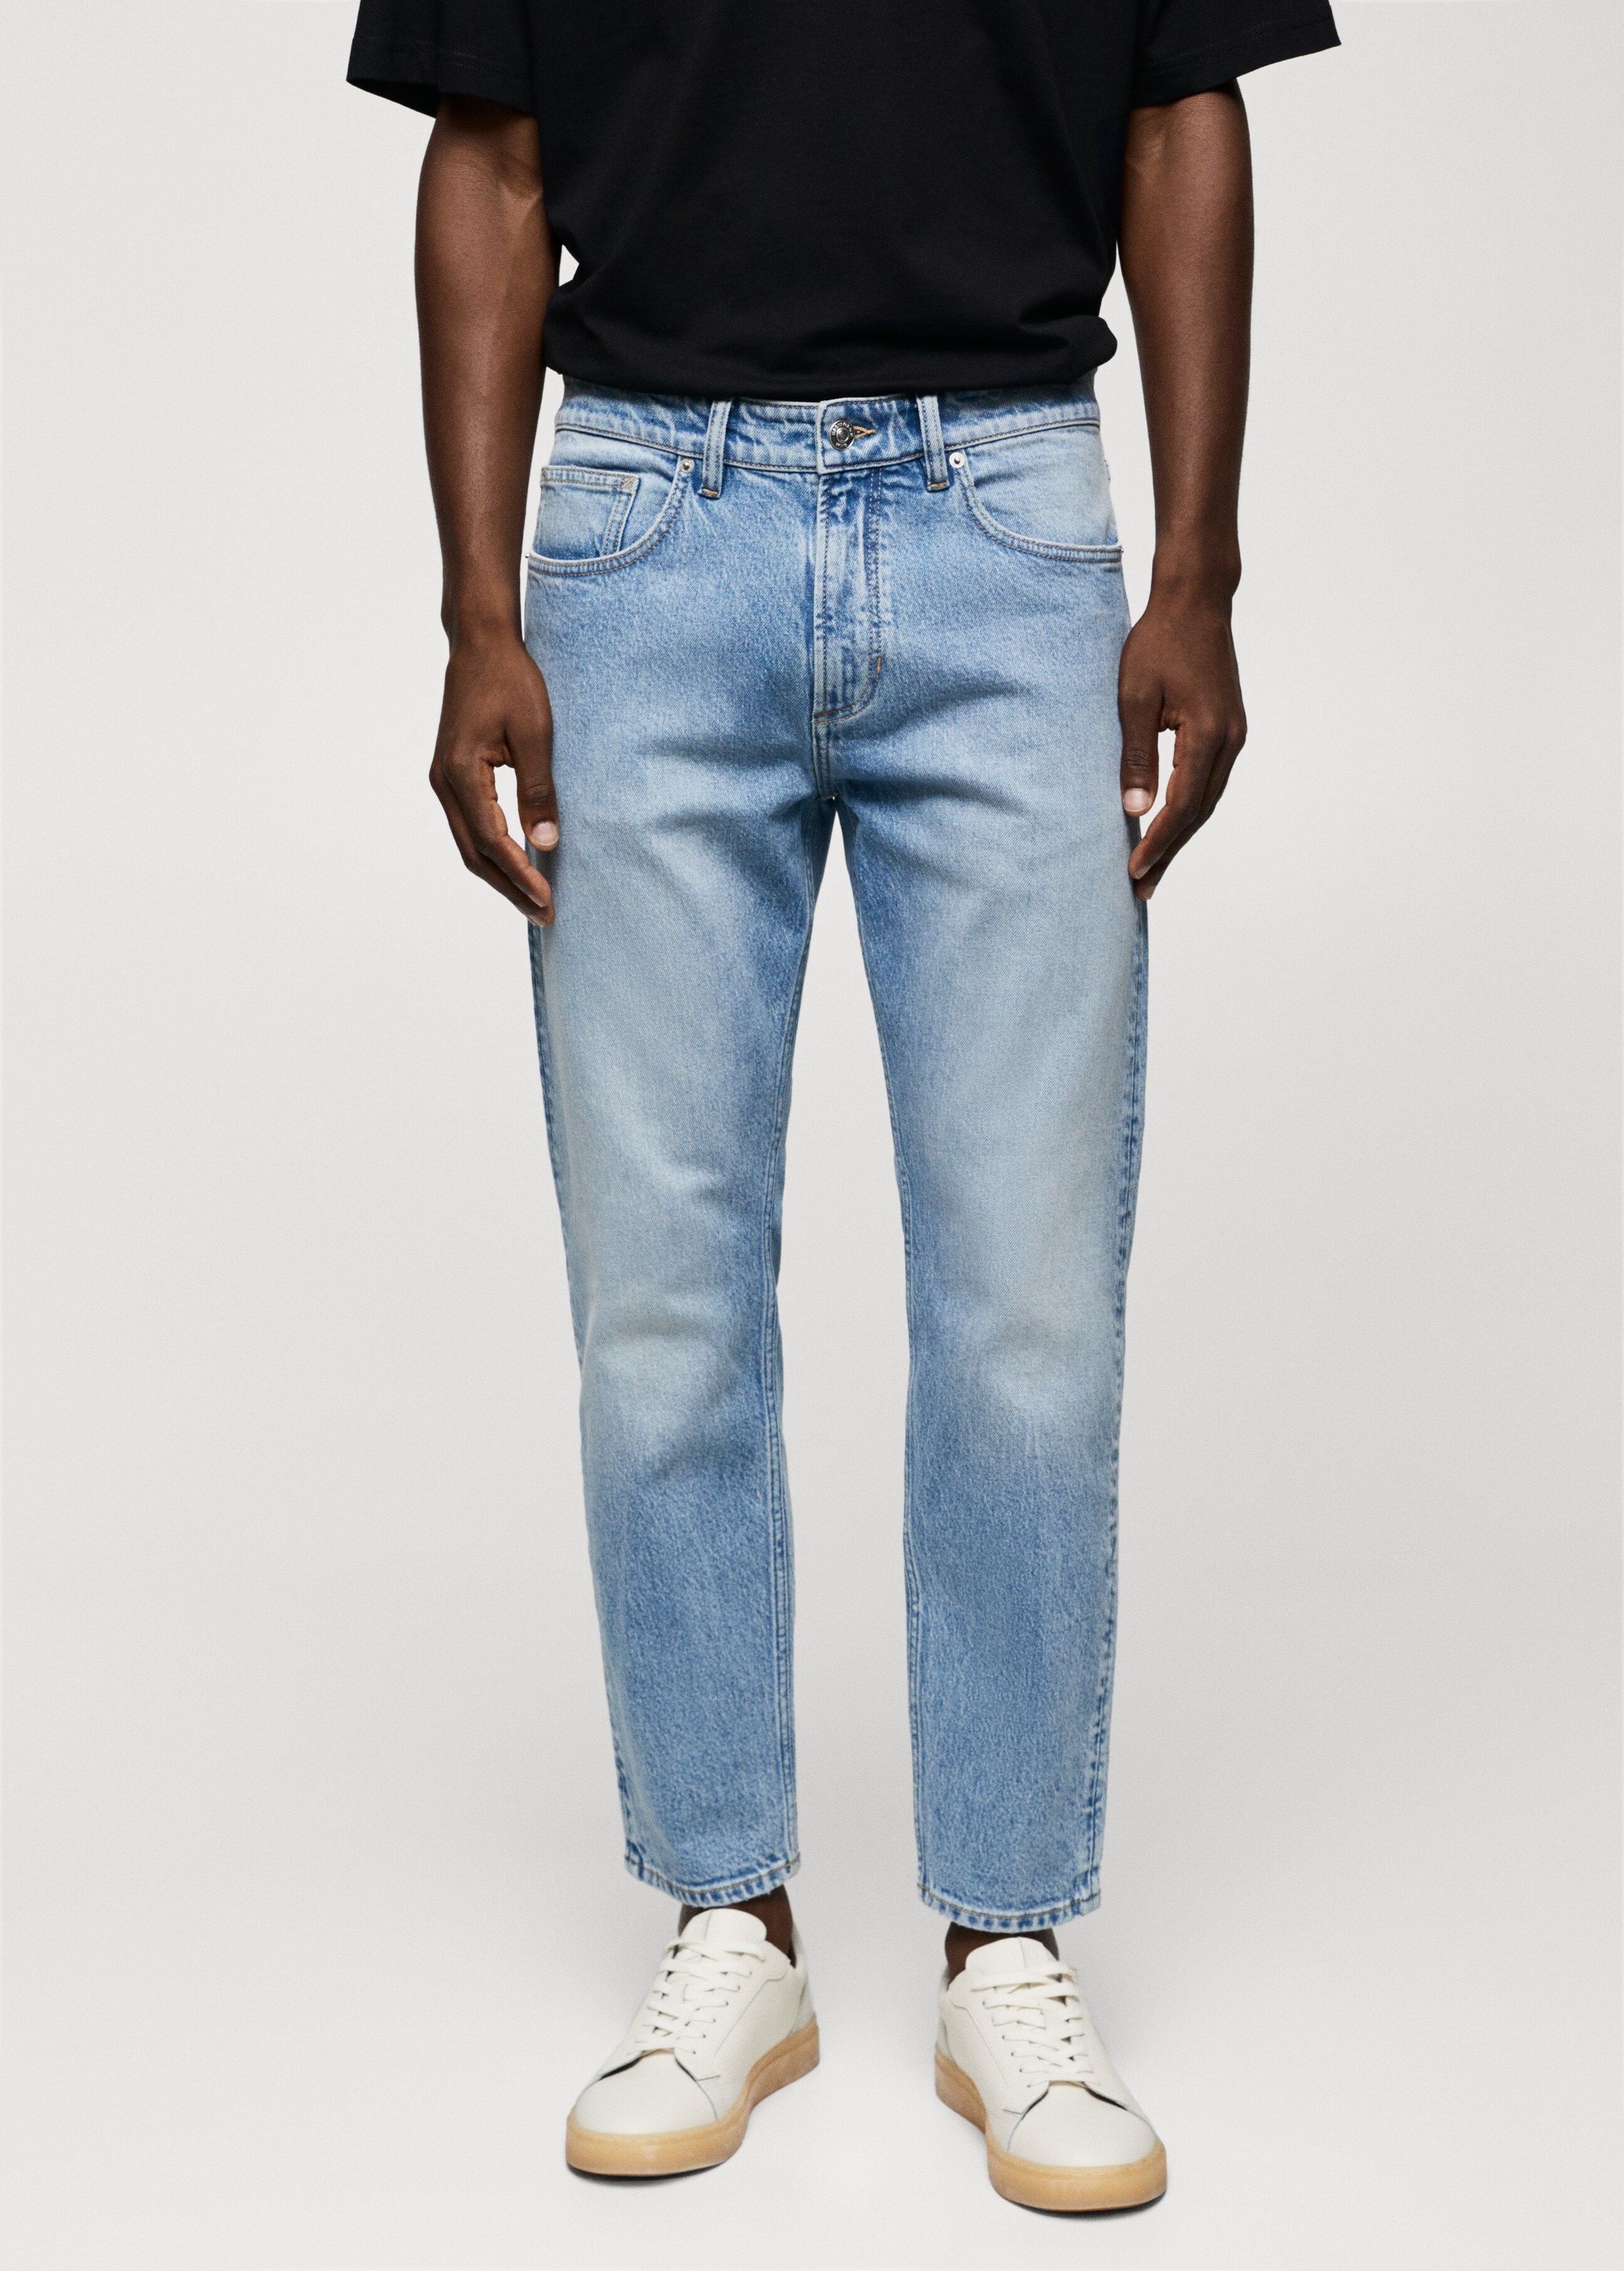 Ben tapered cropped jeans - Medium plane